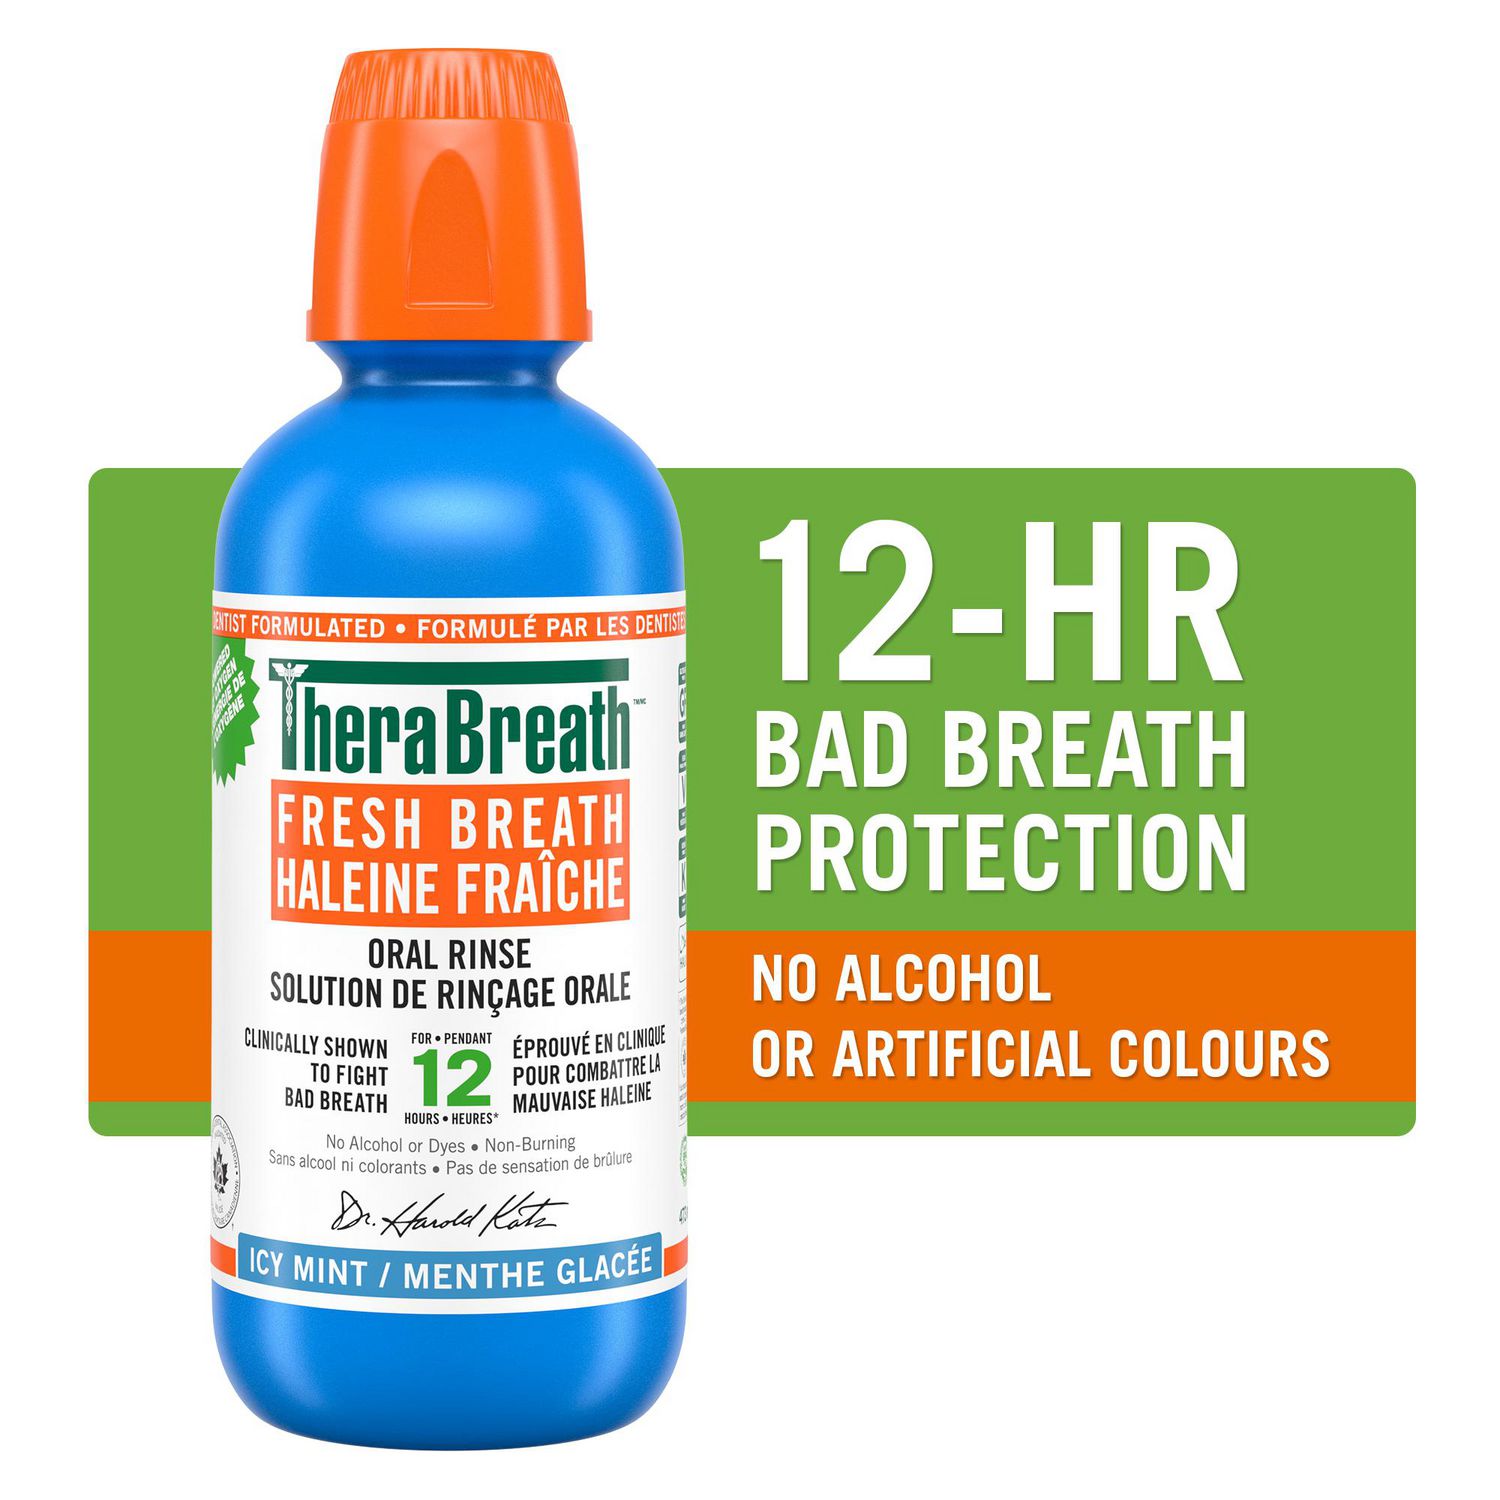 The Breath Co – Solutions de soins bucco-dentaires